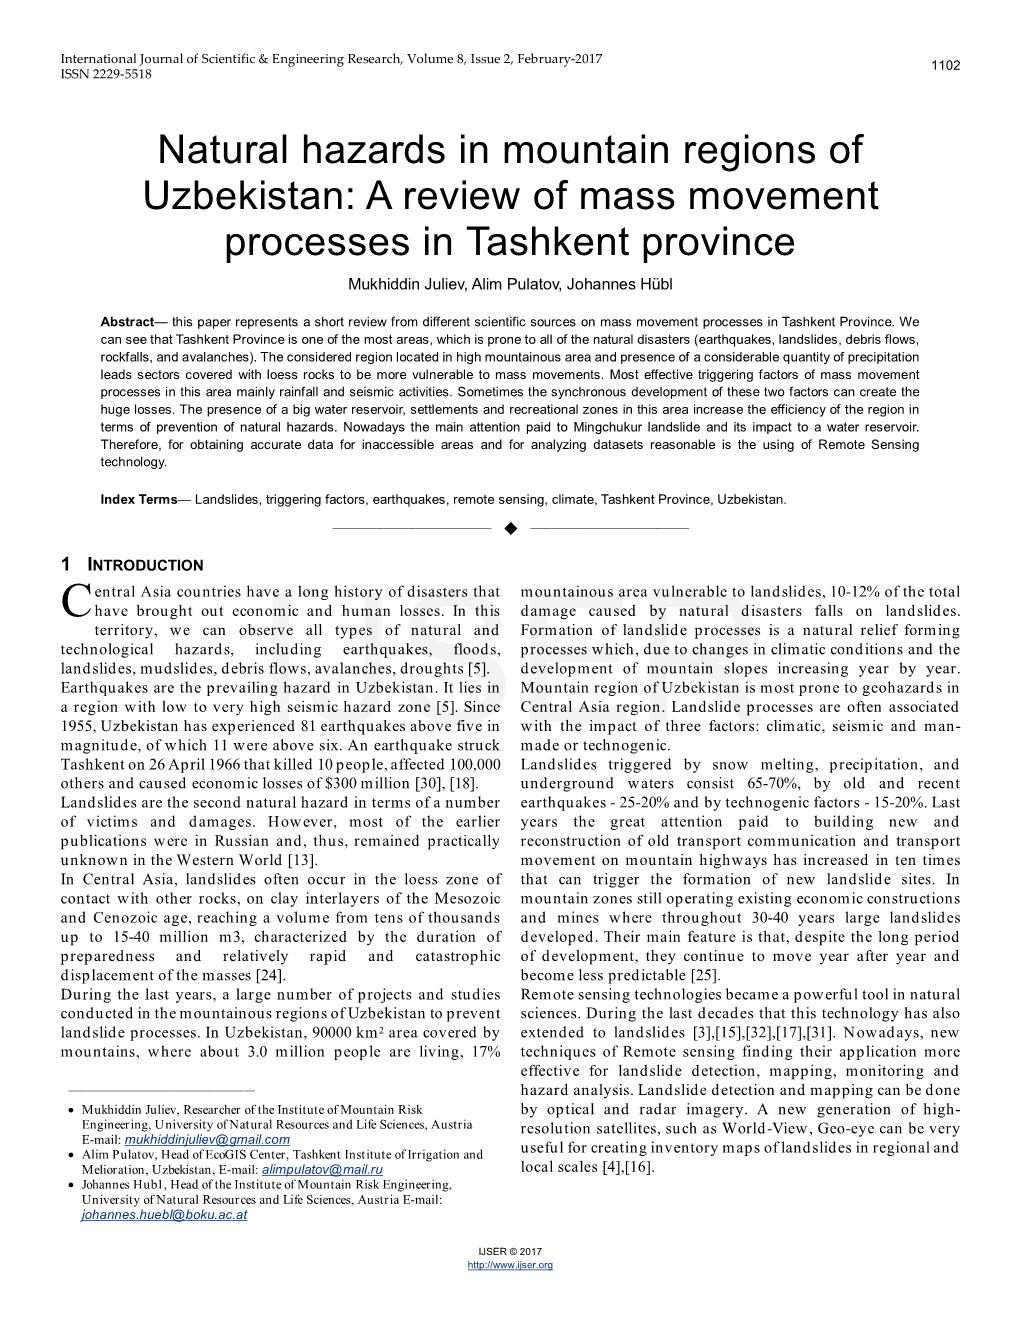 Natural Hazards in Mountain Regions of Uzbekistan: a Review of Mass Movement Processes in Tashkent Province Mukhiddin Juliev, Alim Pulatov, Johannes Hübl